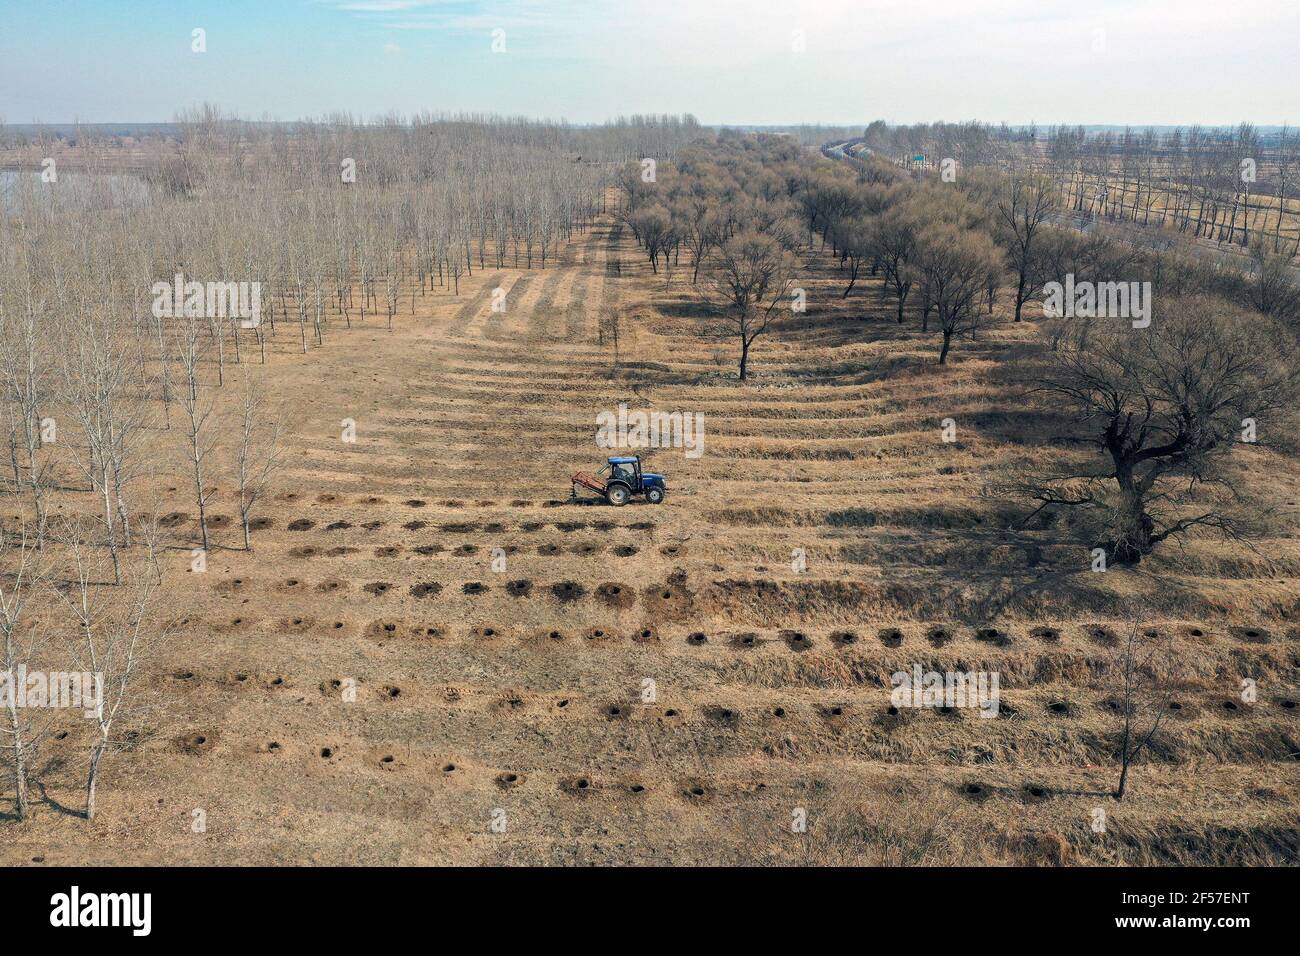 SHENYANG, CHINA - 24 DE MARZO de 2021 - Foto aérea una máquina de perforación de árboles se utiliza para perforar árboles. 24 de marzo de 2021, Shenyang, Provincia de Liaoning, China. (Foto de Ji Zhe / Costfoto/Sipa USA) Foto de stock